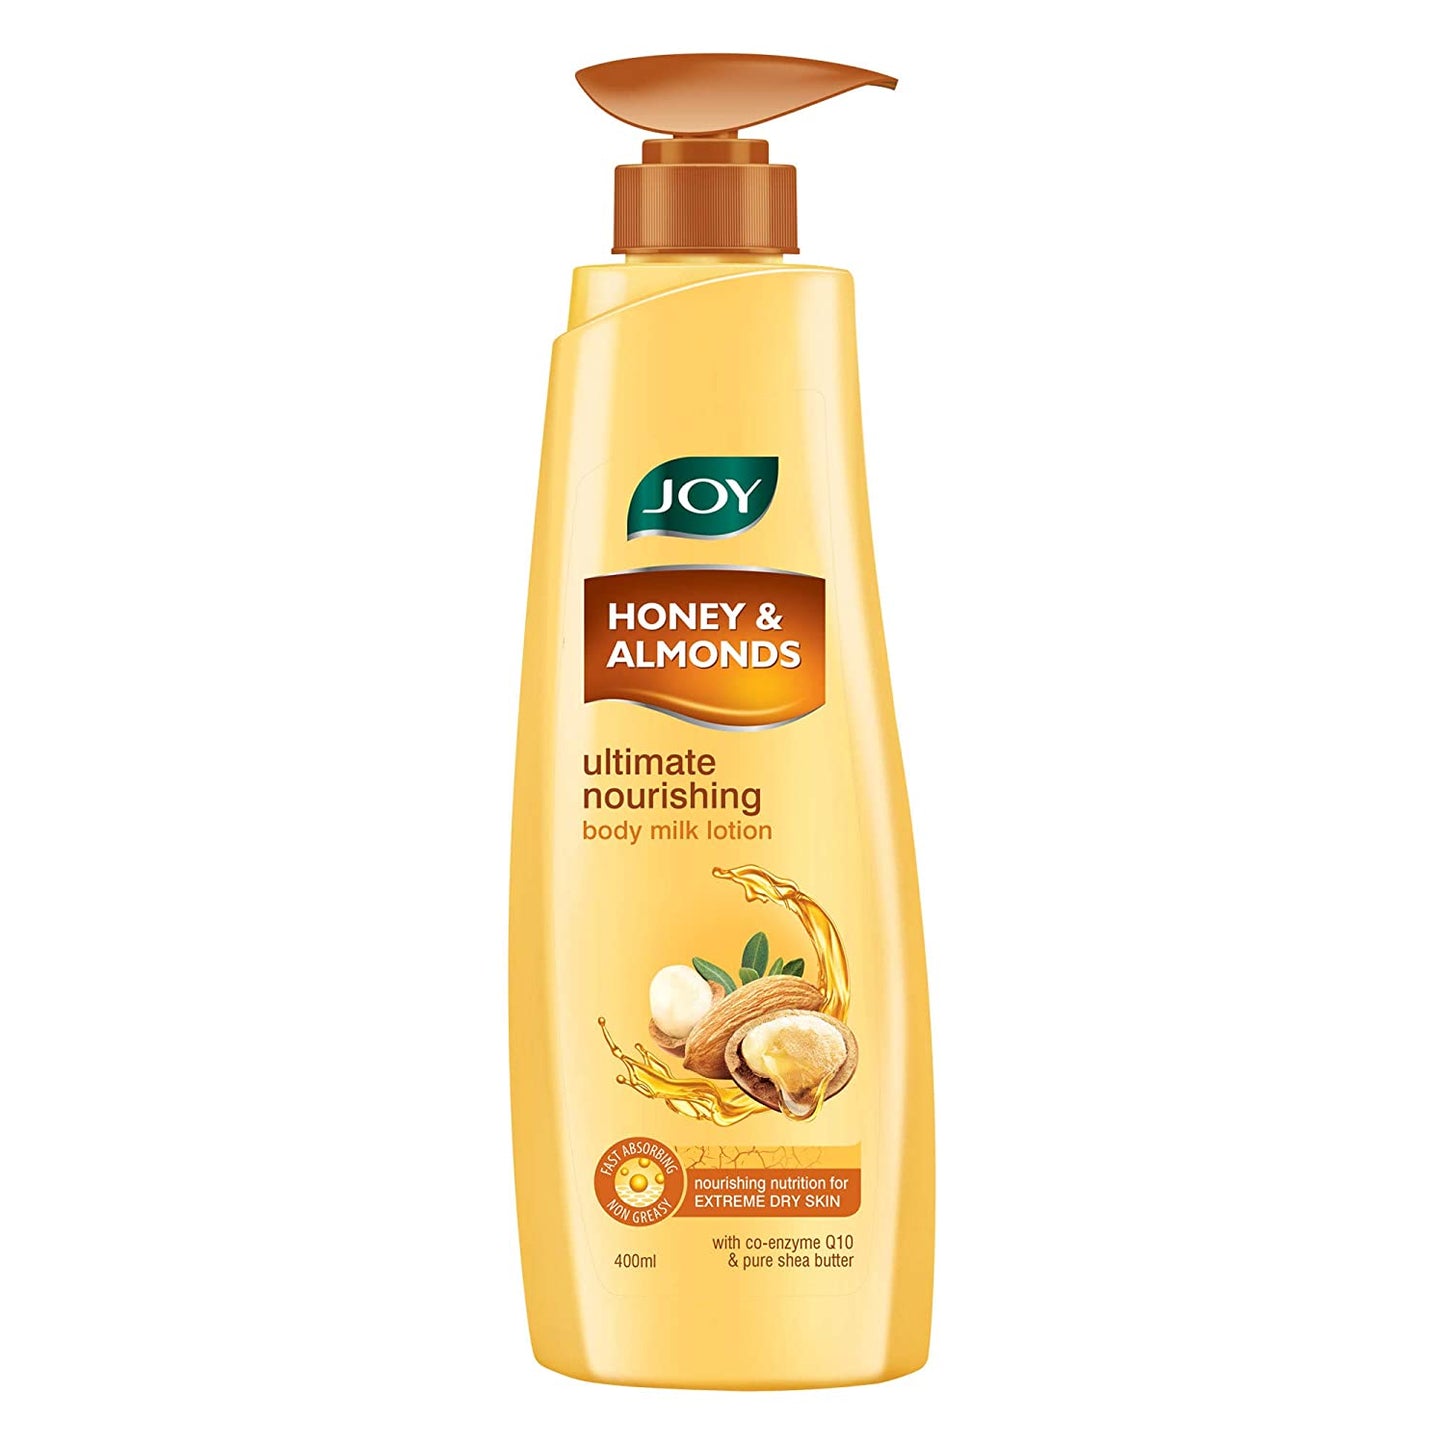 Joy Honey & Almonds Ultimate Nourishing Body Lotion For Extremely Dry Skin - 400ml, Joy Honey & Almonds Ultimate Nourishing Body Lotion For Extremely Dry Skin , body lotion